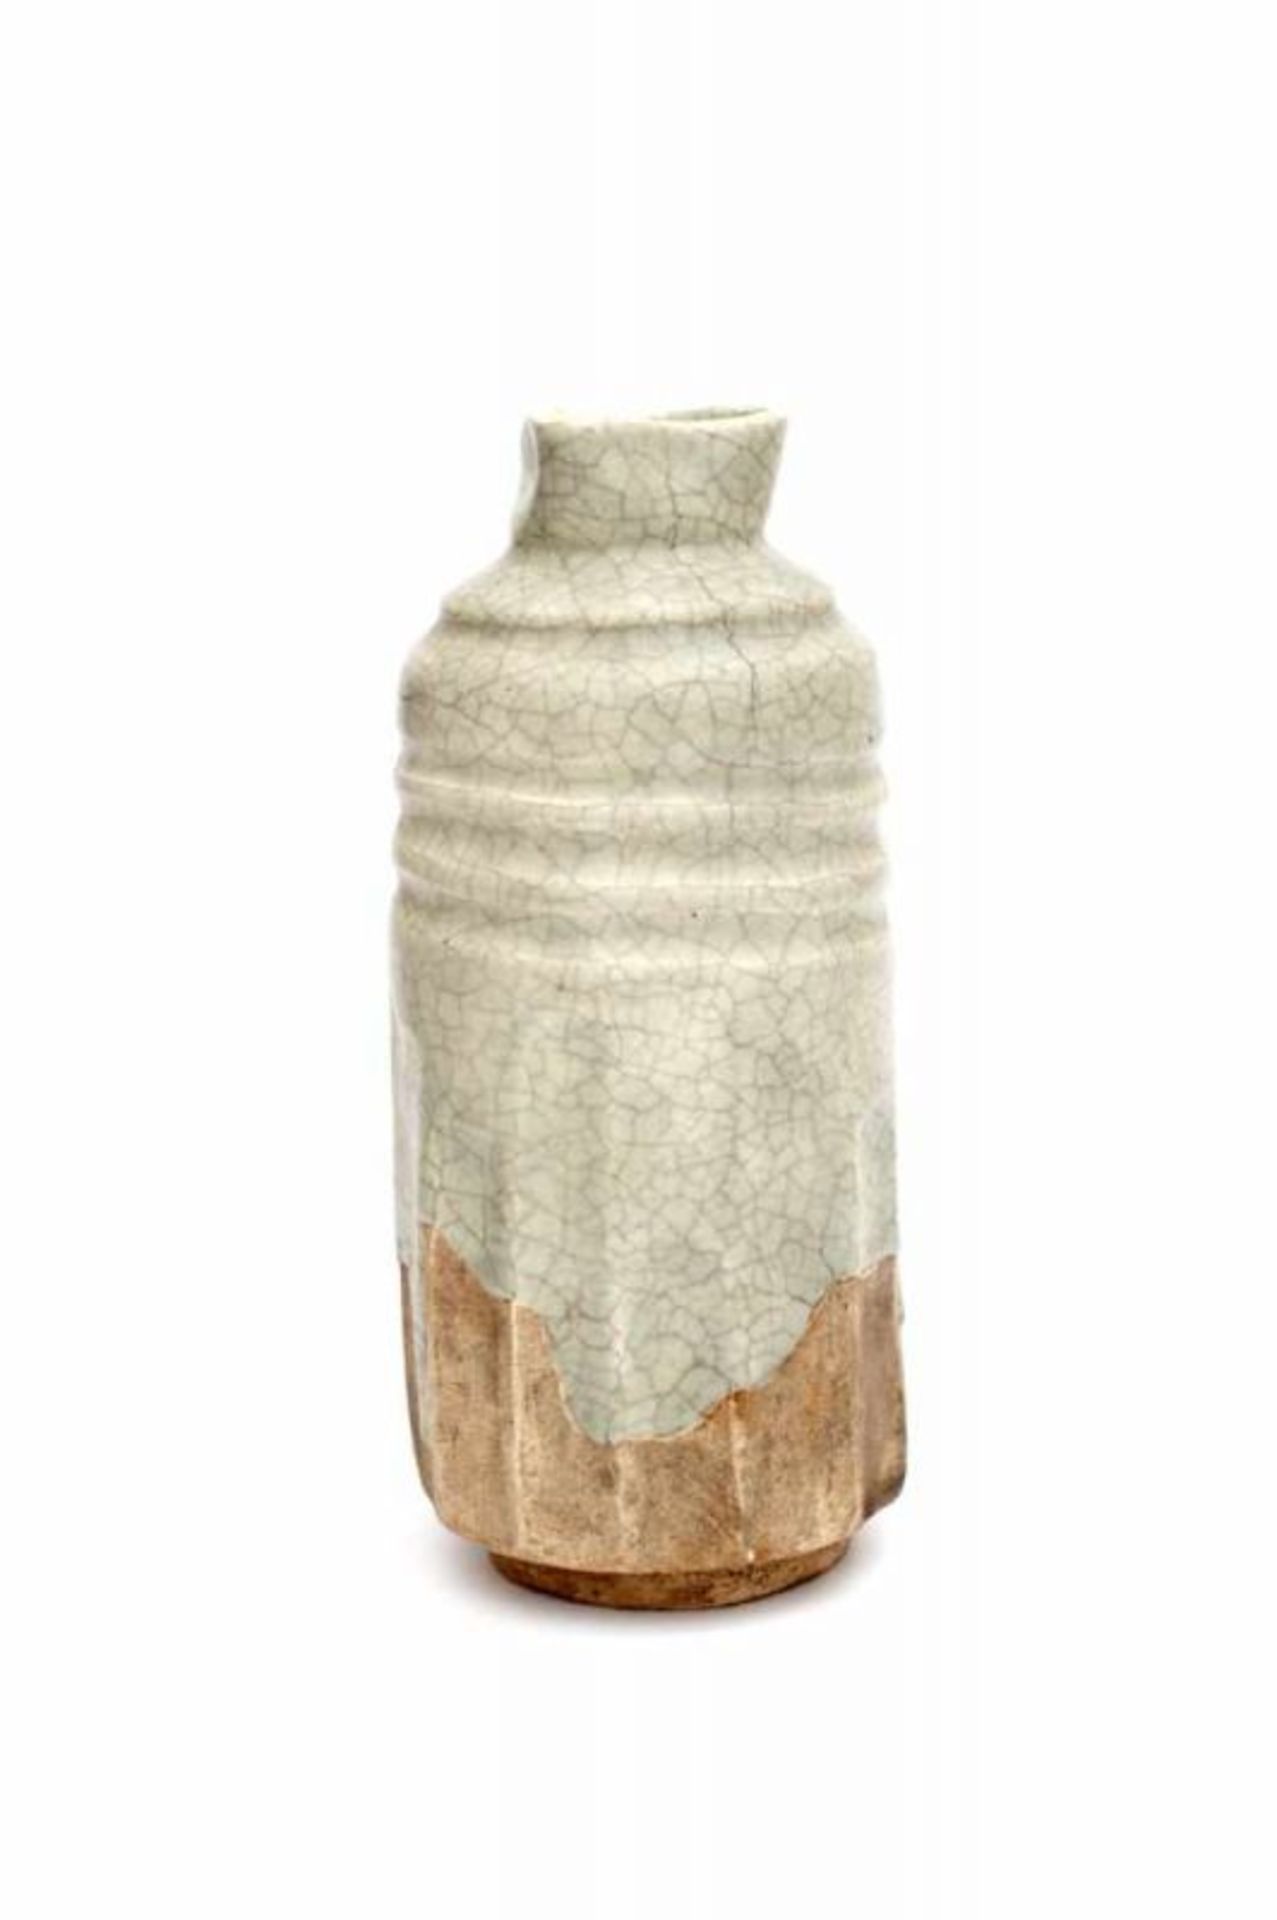 Madeleine Sougez (1891-?) (0-) A ceramic vase with crackled glaze, production Atelier Primavera,